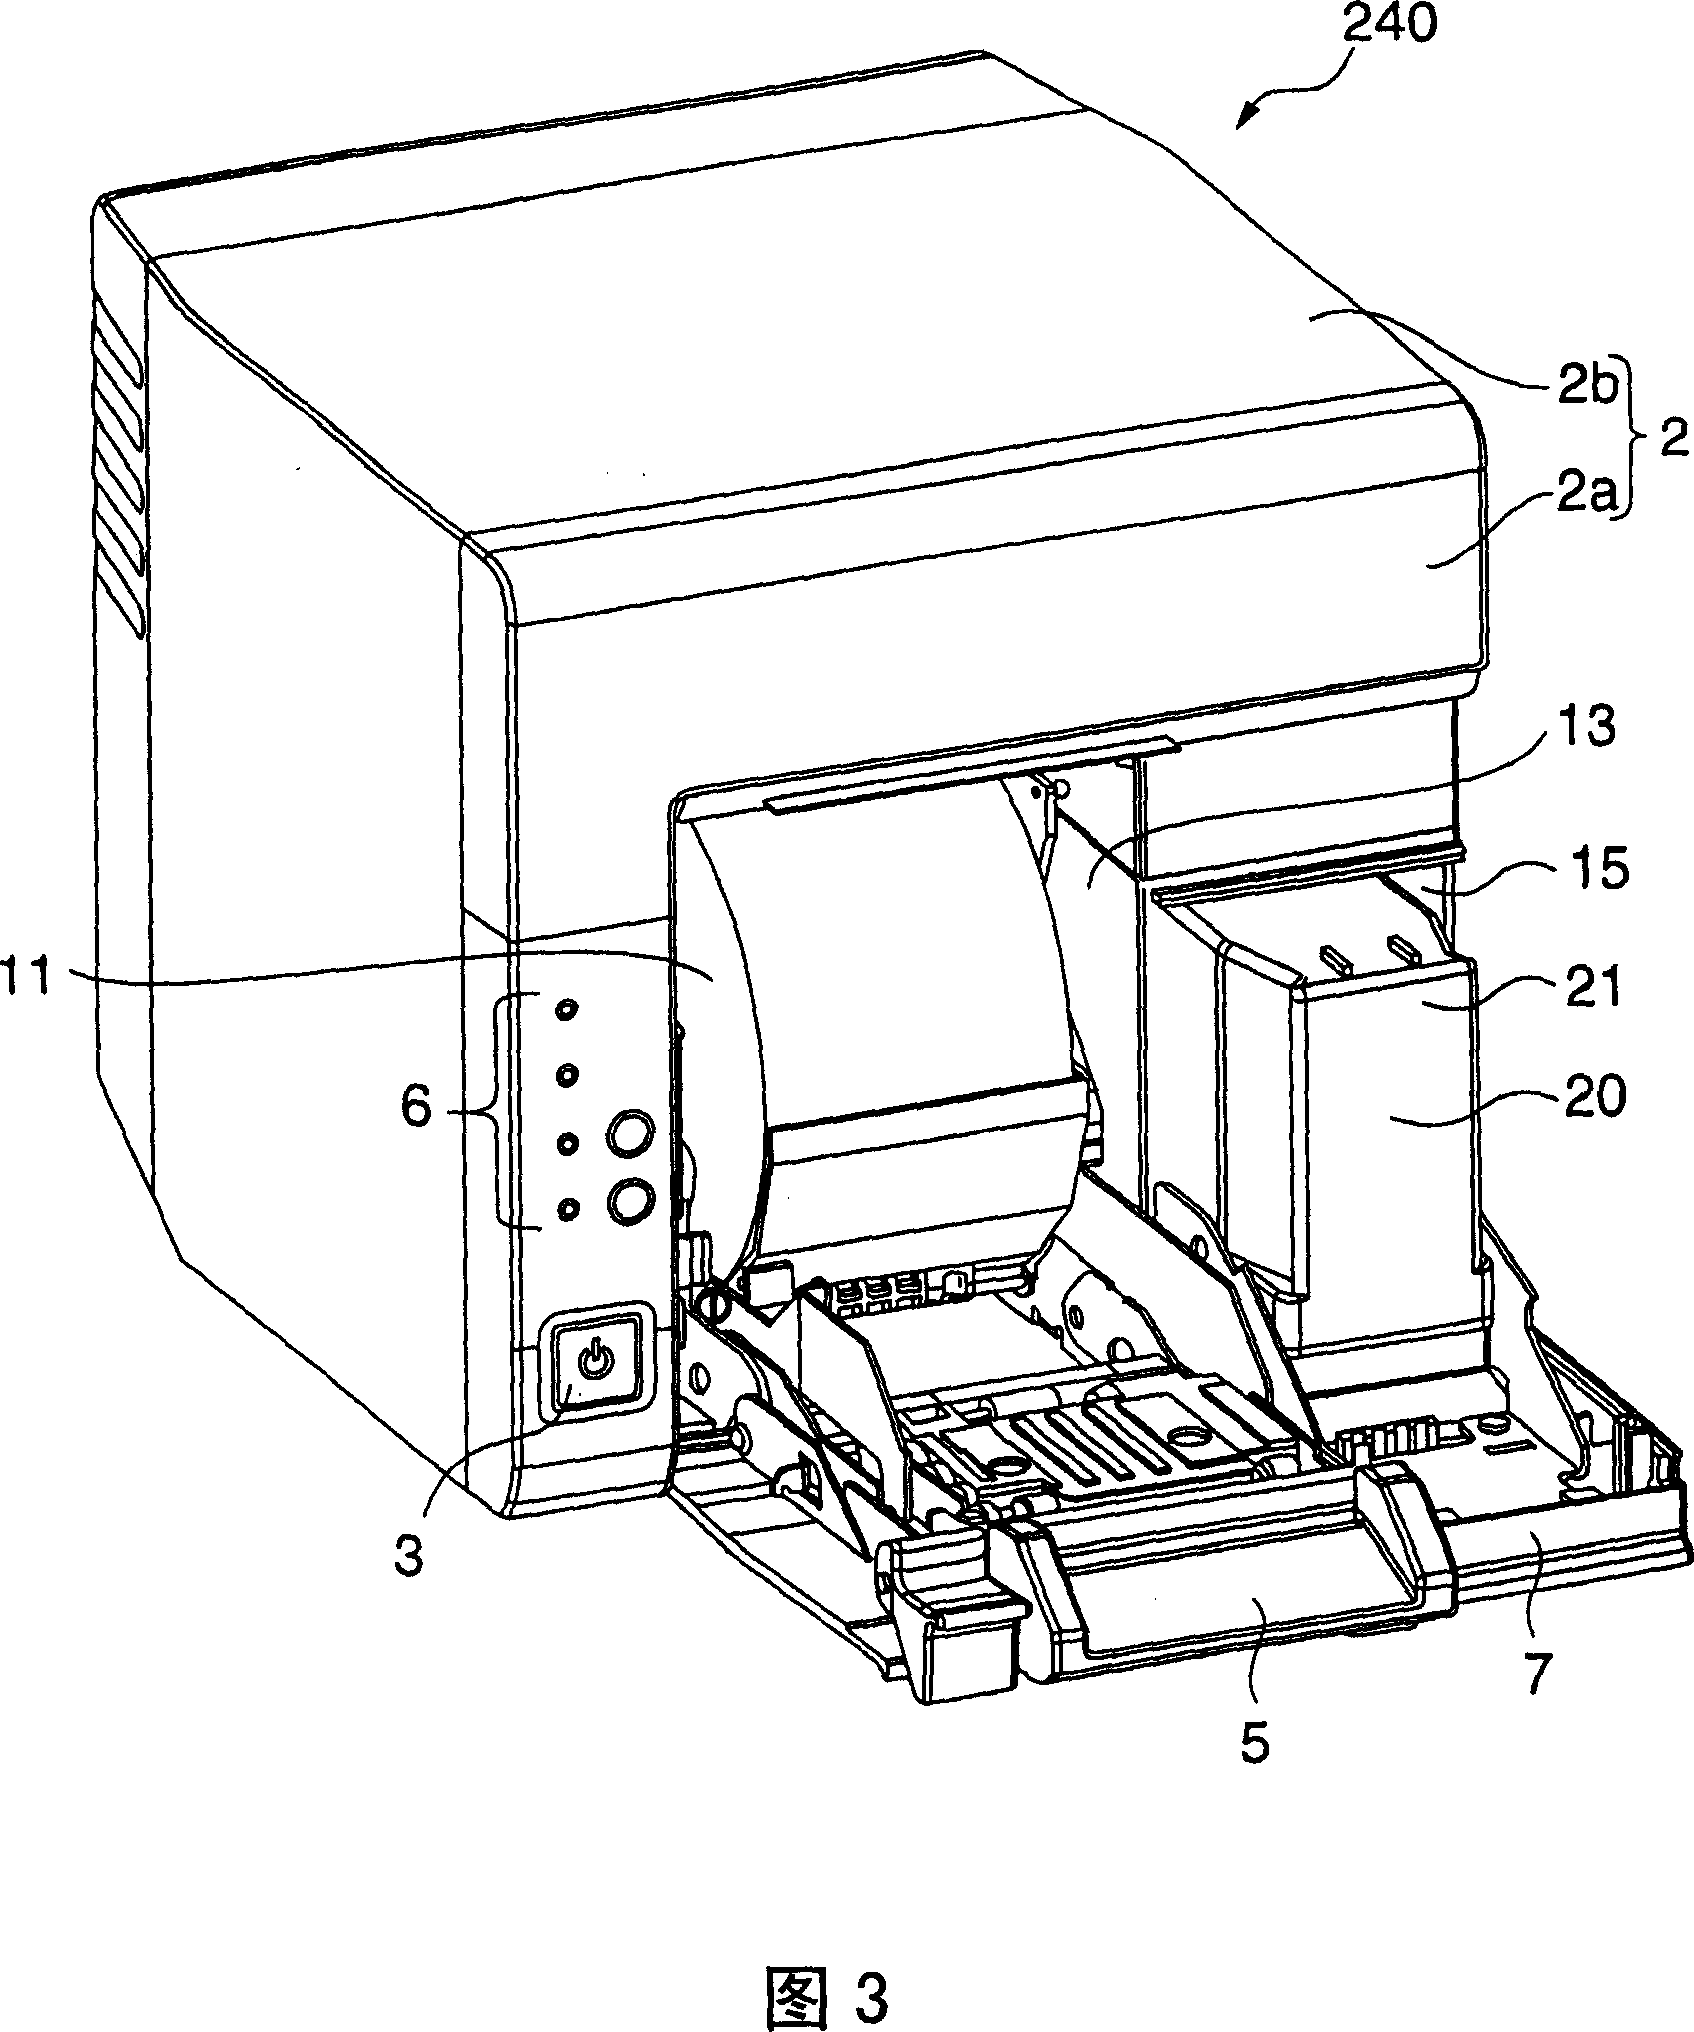 Printer and printing system